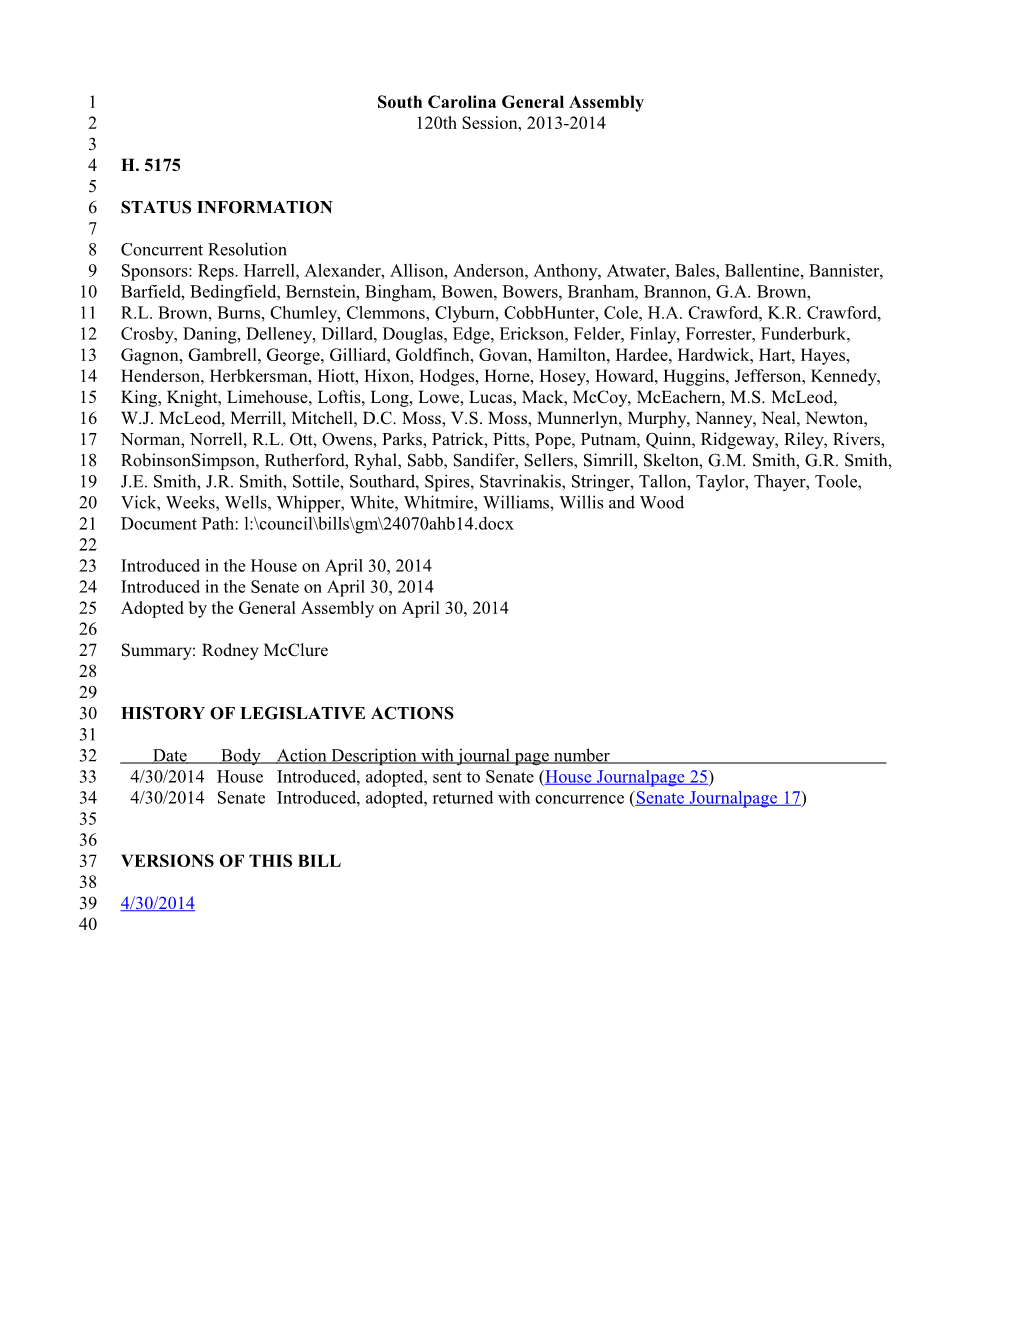 2013-2014 Bill 5175: Rodney Mcclure - South Carolina Legislature Online